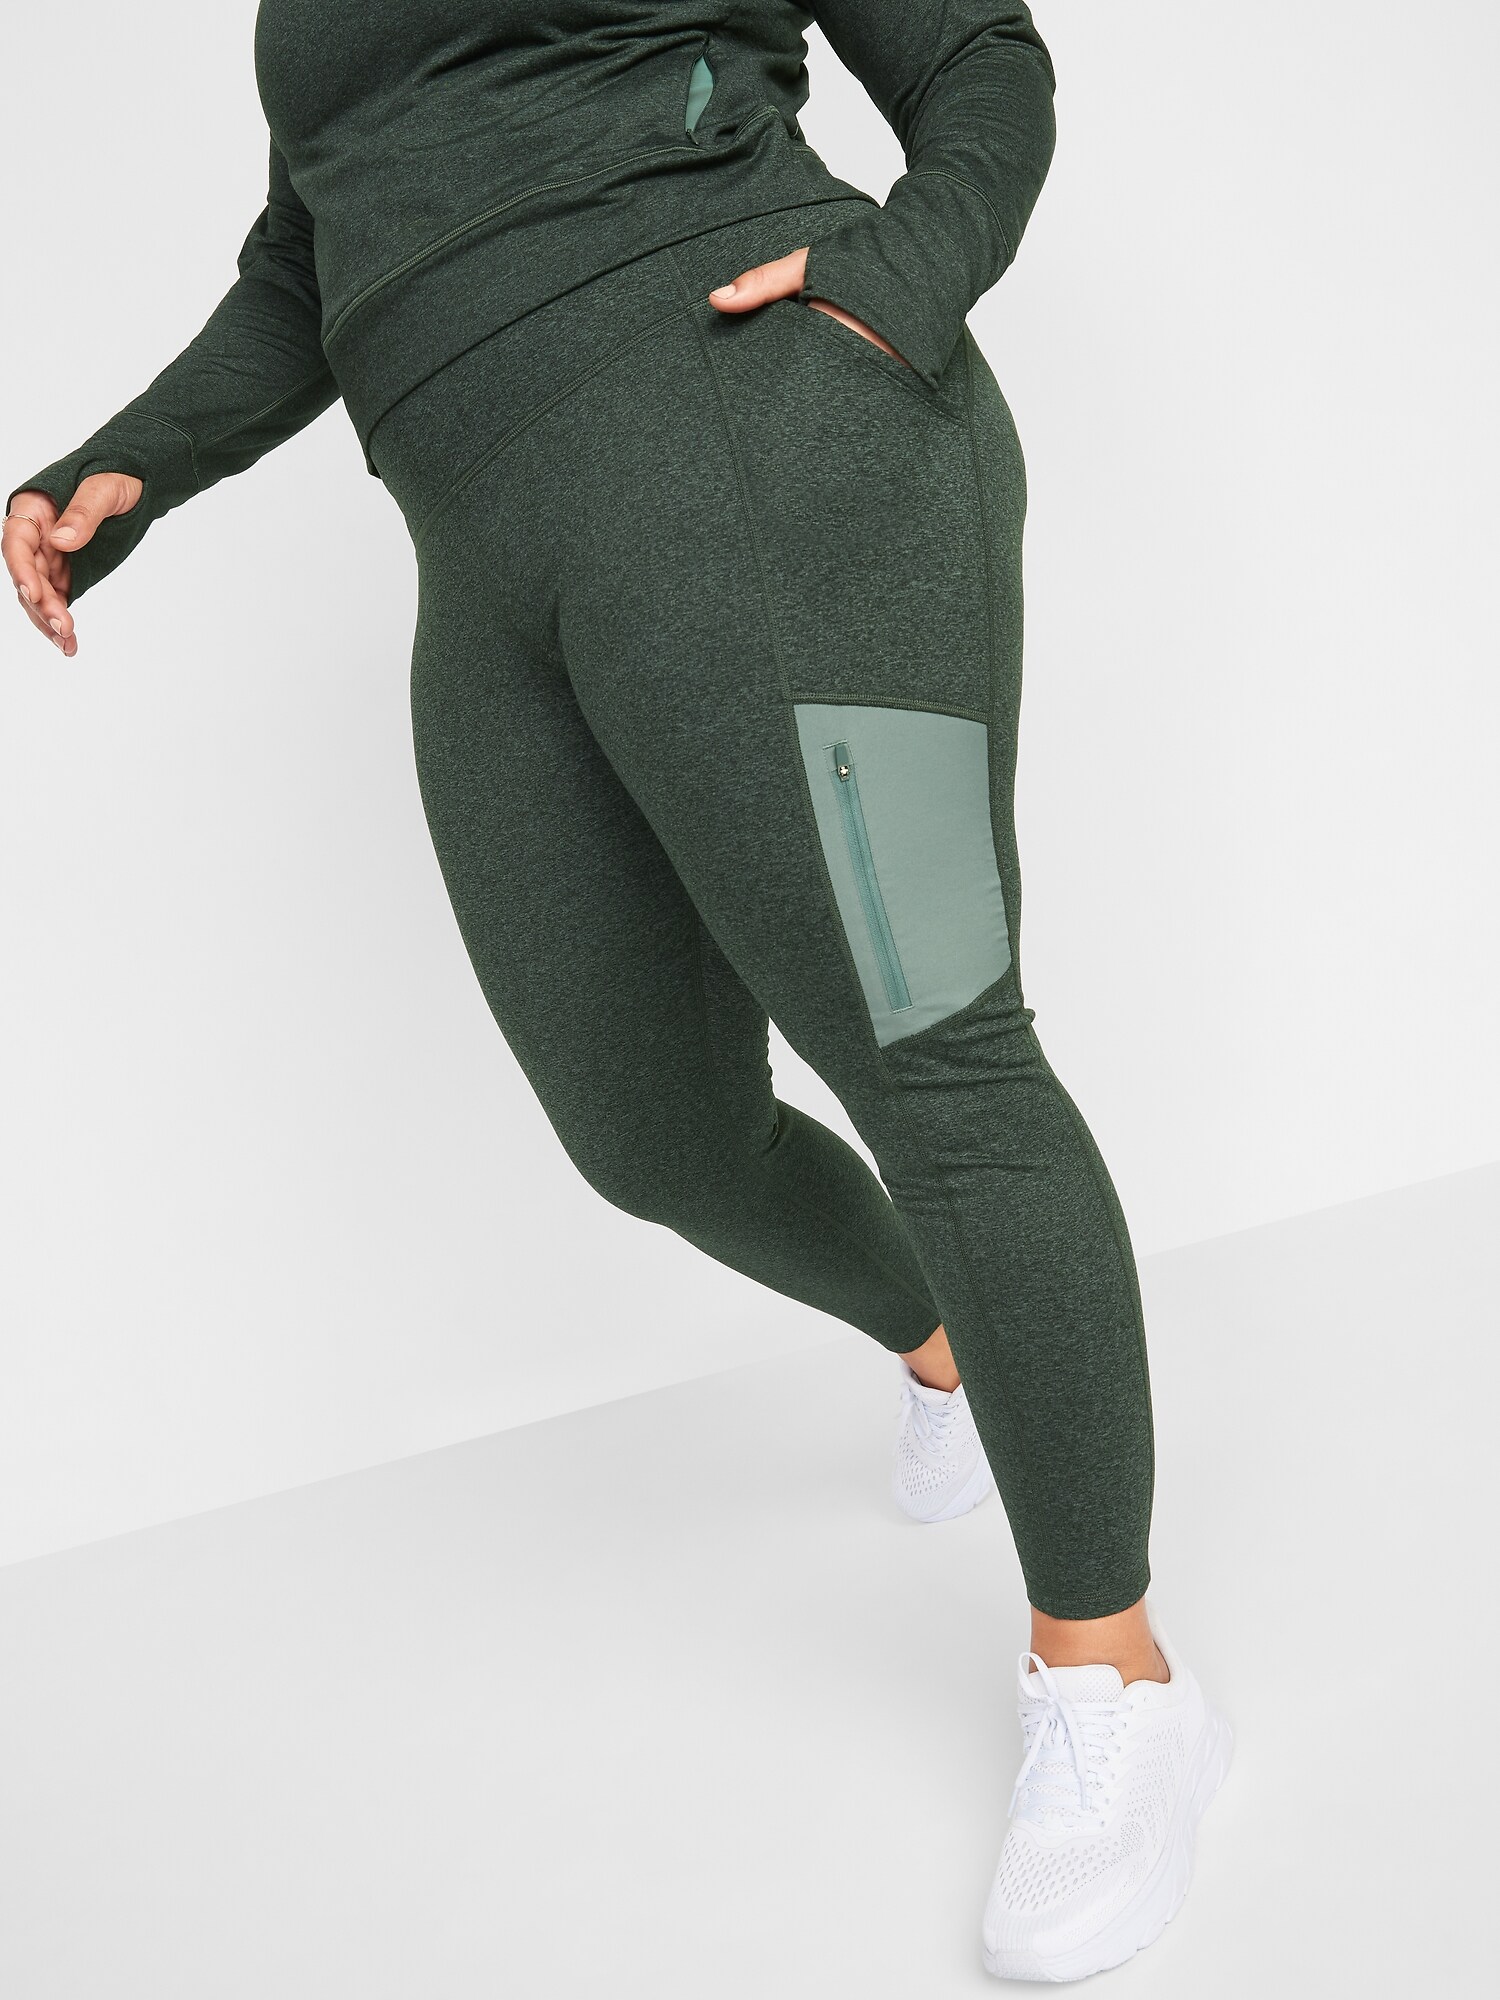 High-Waisted CozeCore Hybrid Zip-Pocket Leggings for Women - Forest Green